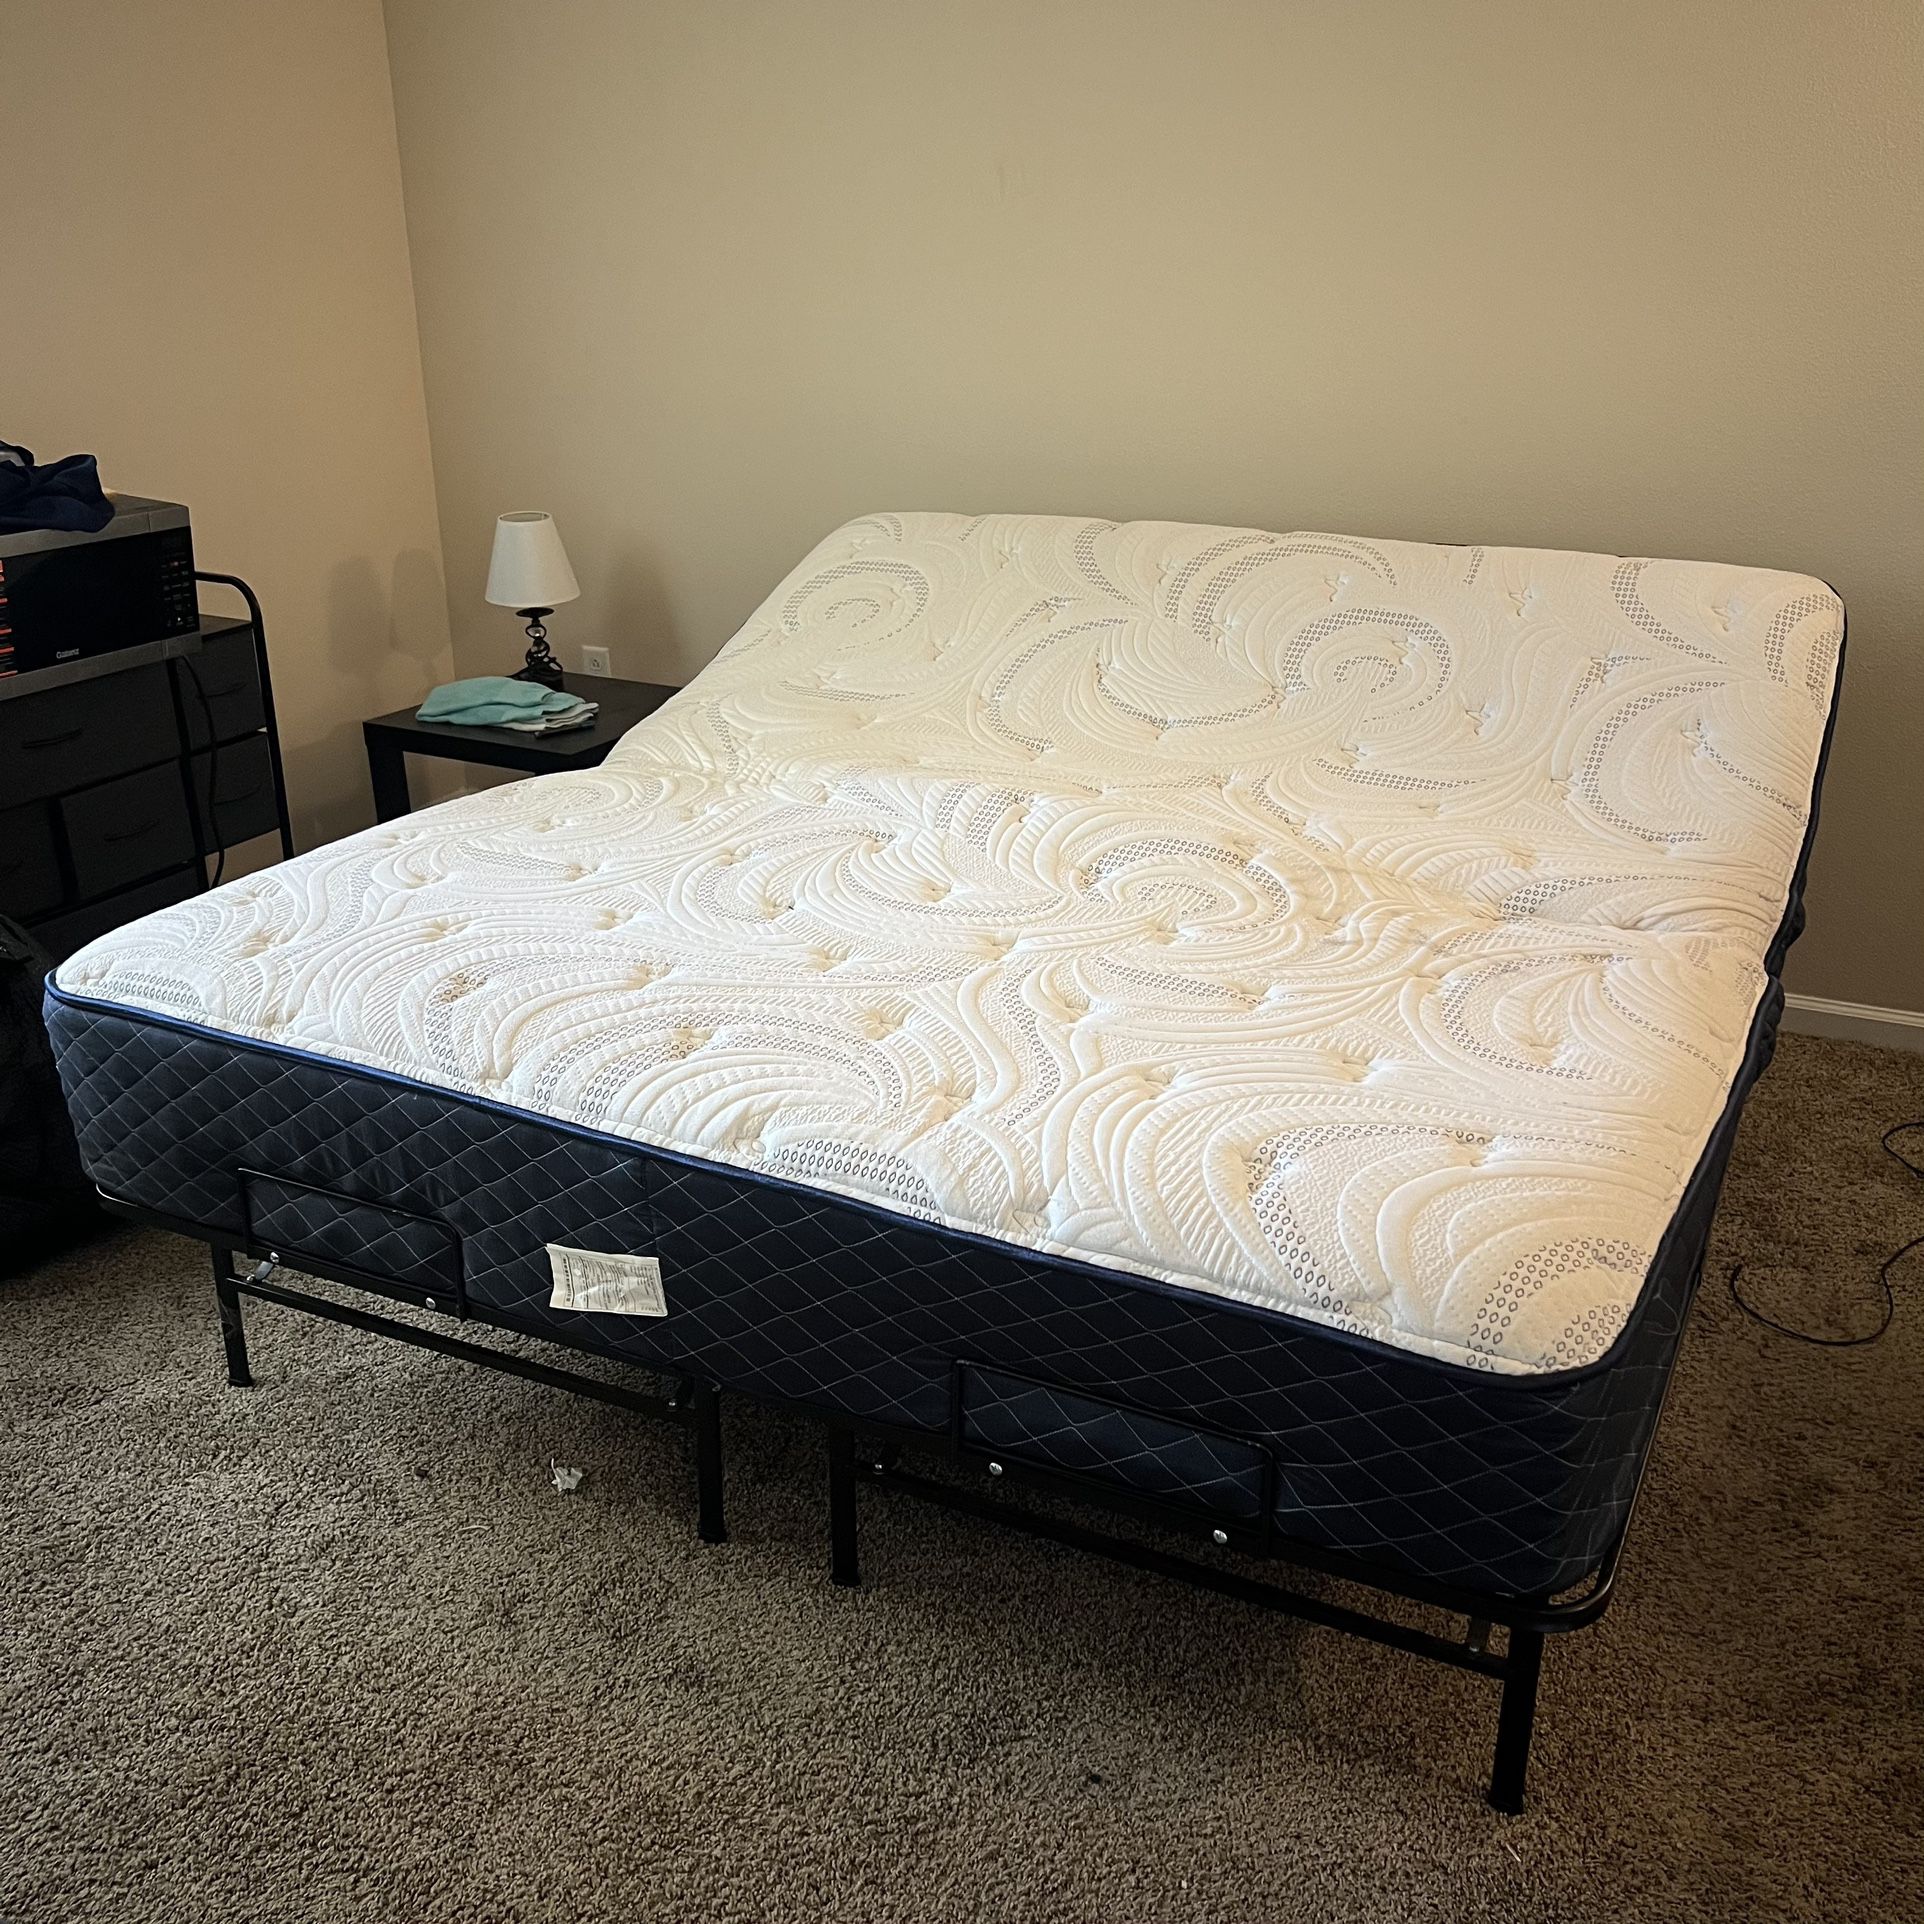 King Size Bed W/Adjustable Bed Frame (PICK UP PRICE)